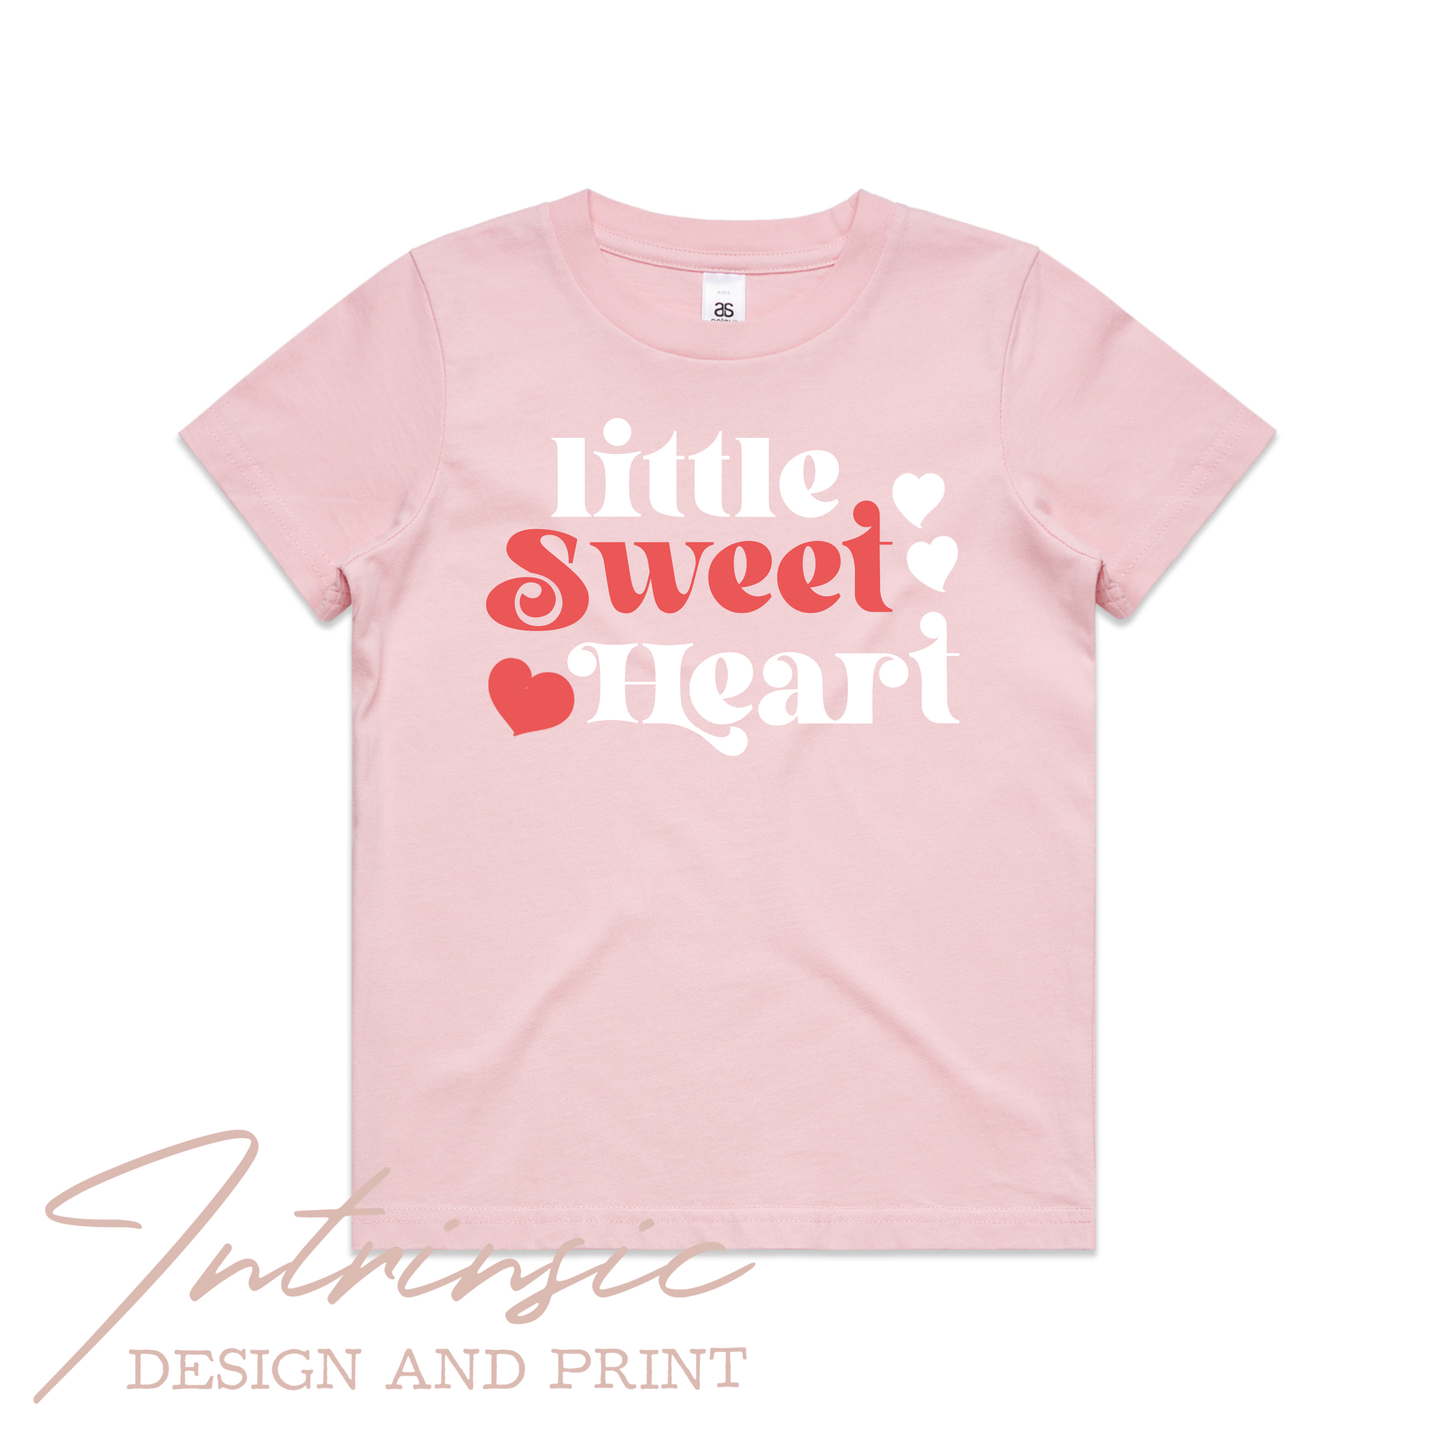 Sweet heart - Kids tee